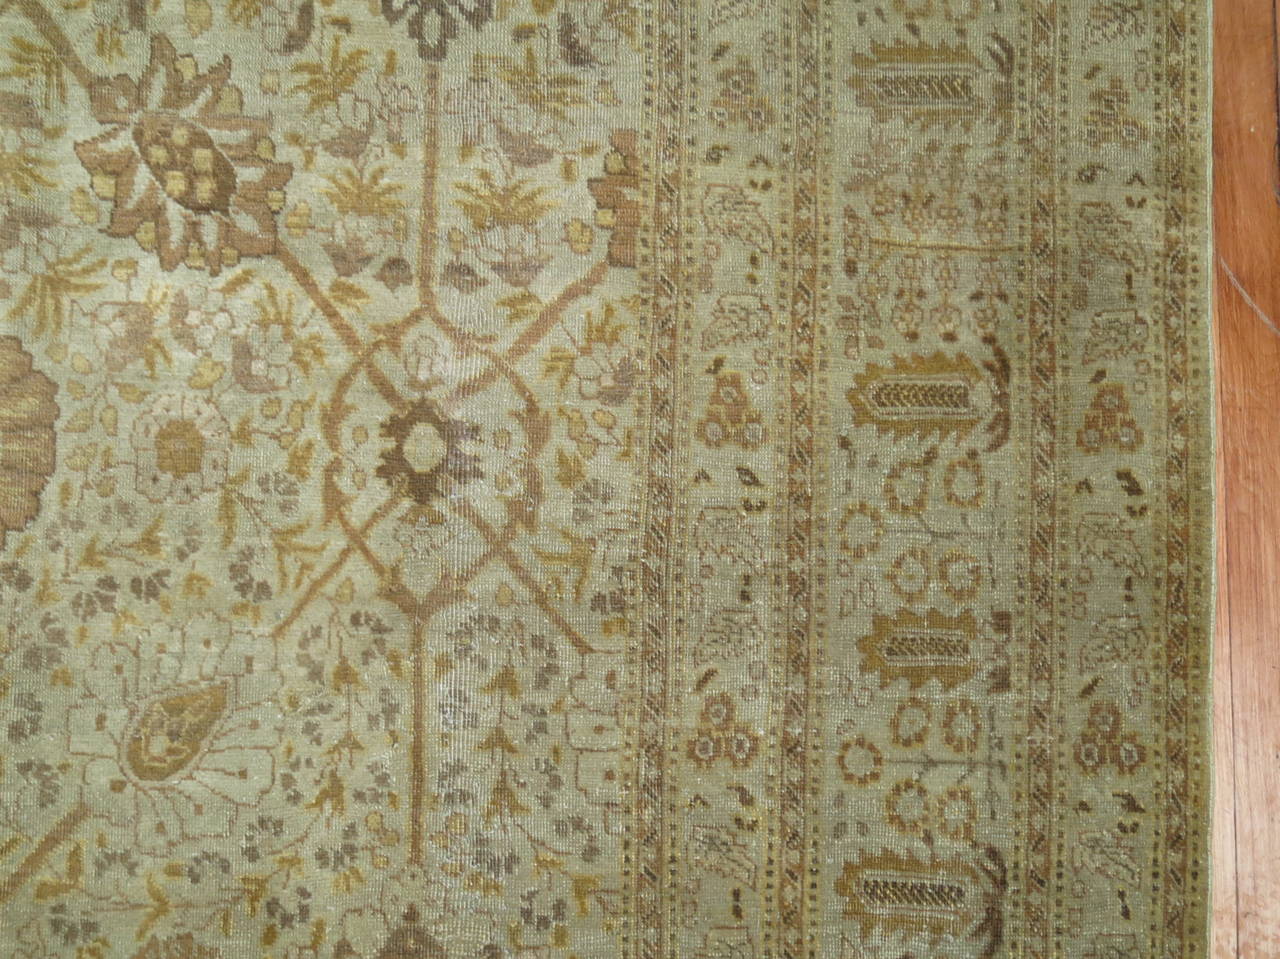 Hand-Knotted Beige Umber Brown Antique Persian Tabriz Carpet For Sale